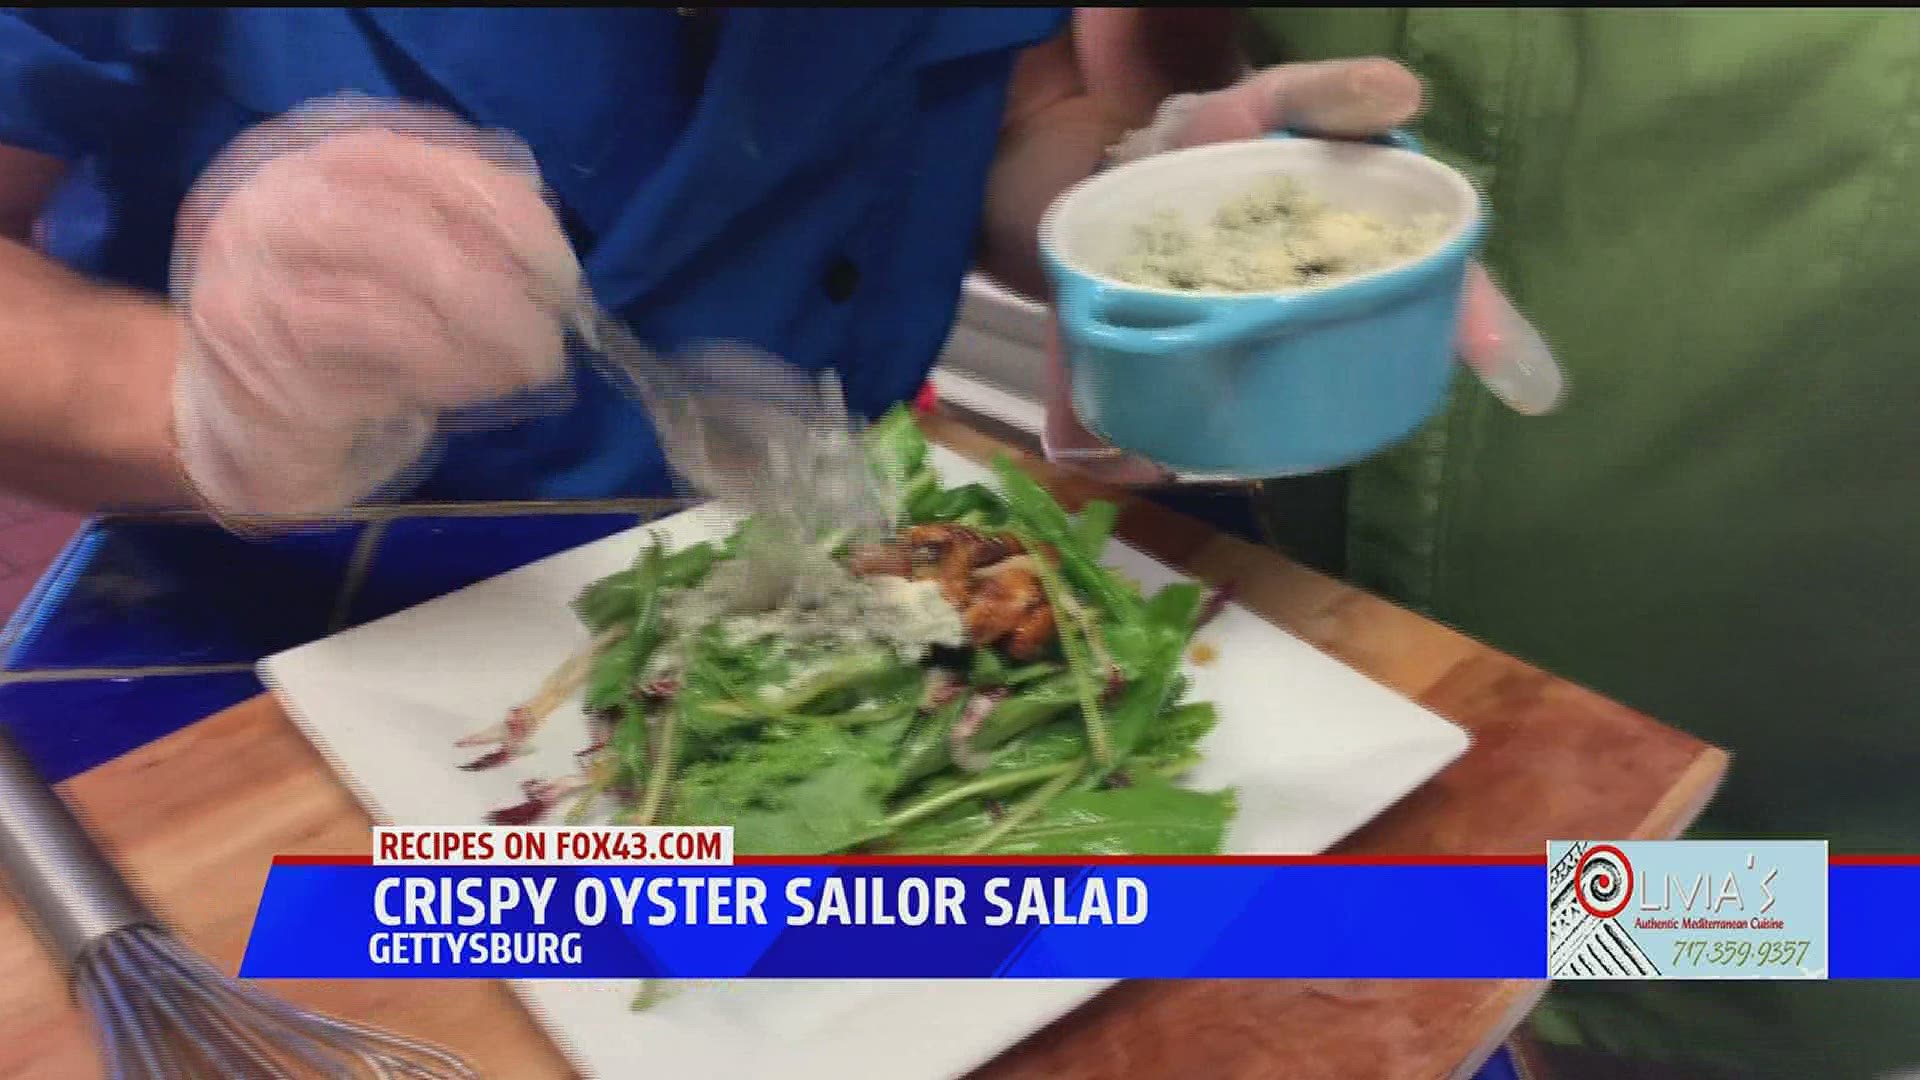 Olivias Prepares Crispy Oyster Sailor Salad